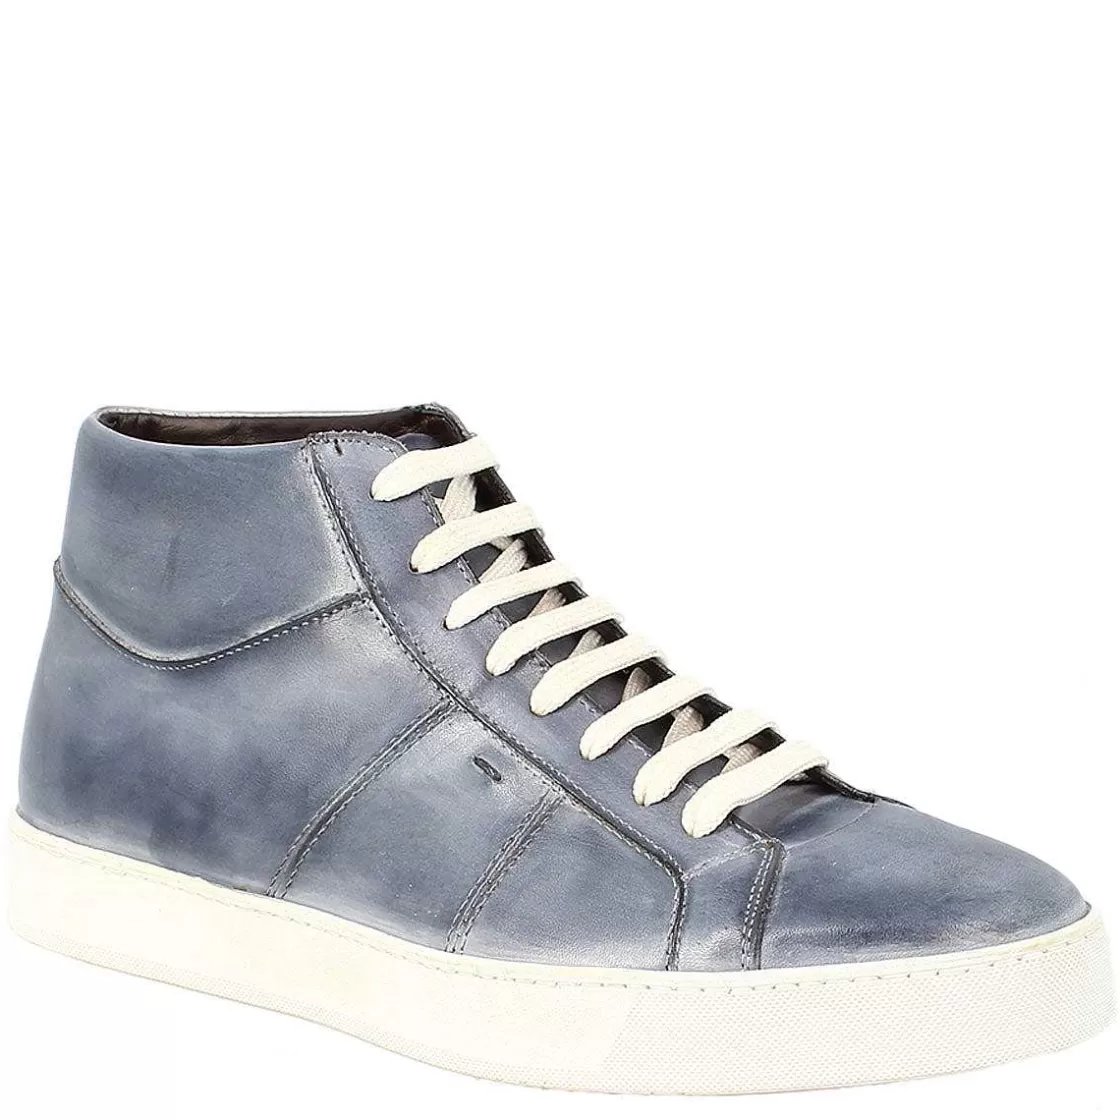 Leonardo Men'S Handmade High-Top Sneakers In Gray Calf Leather Outlet